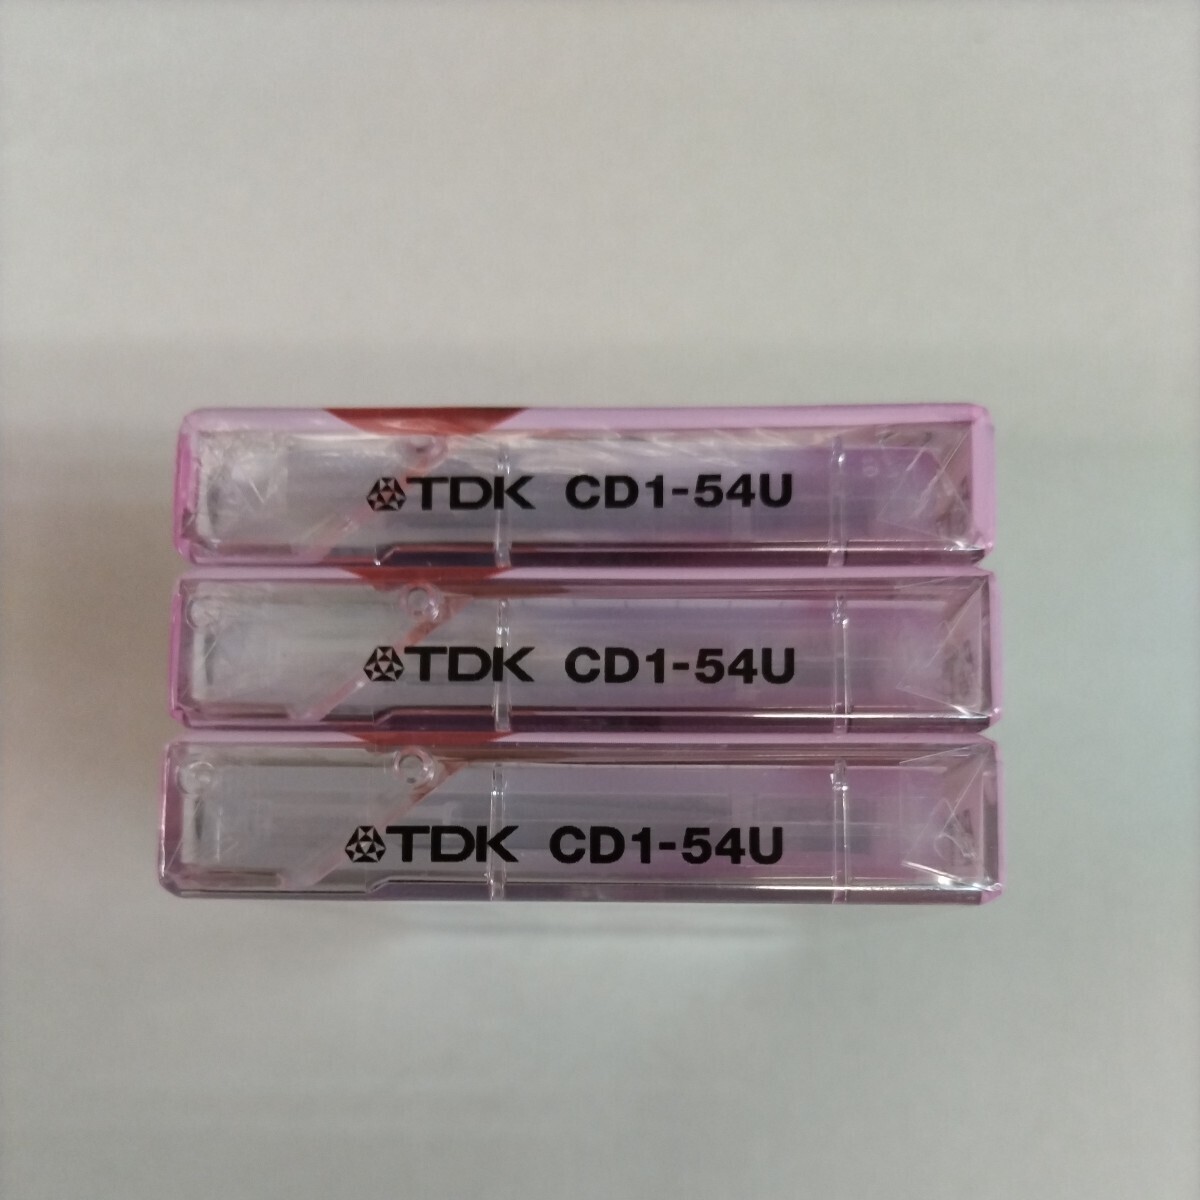 TDK CDing154 normal position cassette tape 3 pcs set set ( asunder sale un- possible shrink . a little abrasion .. equipped )